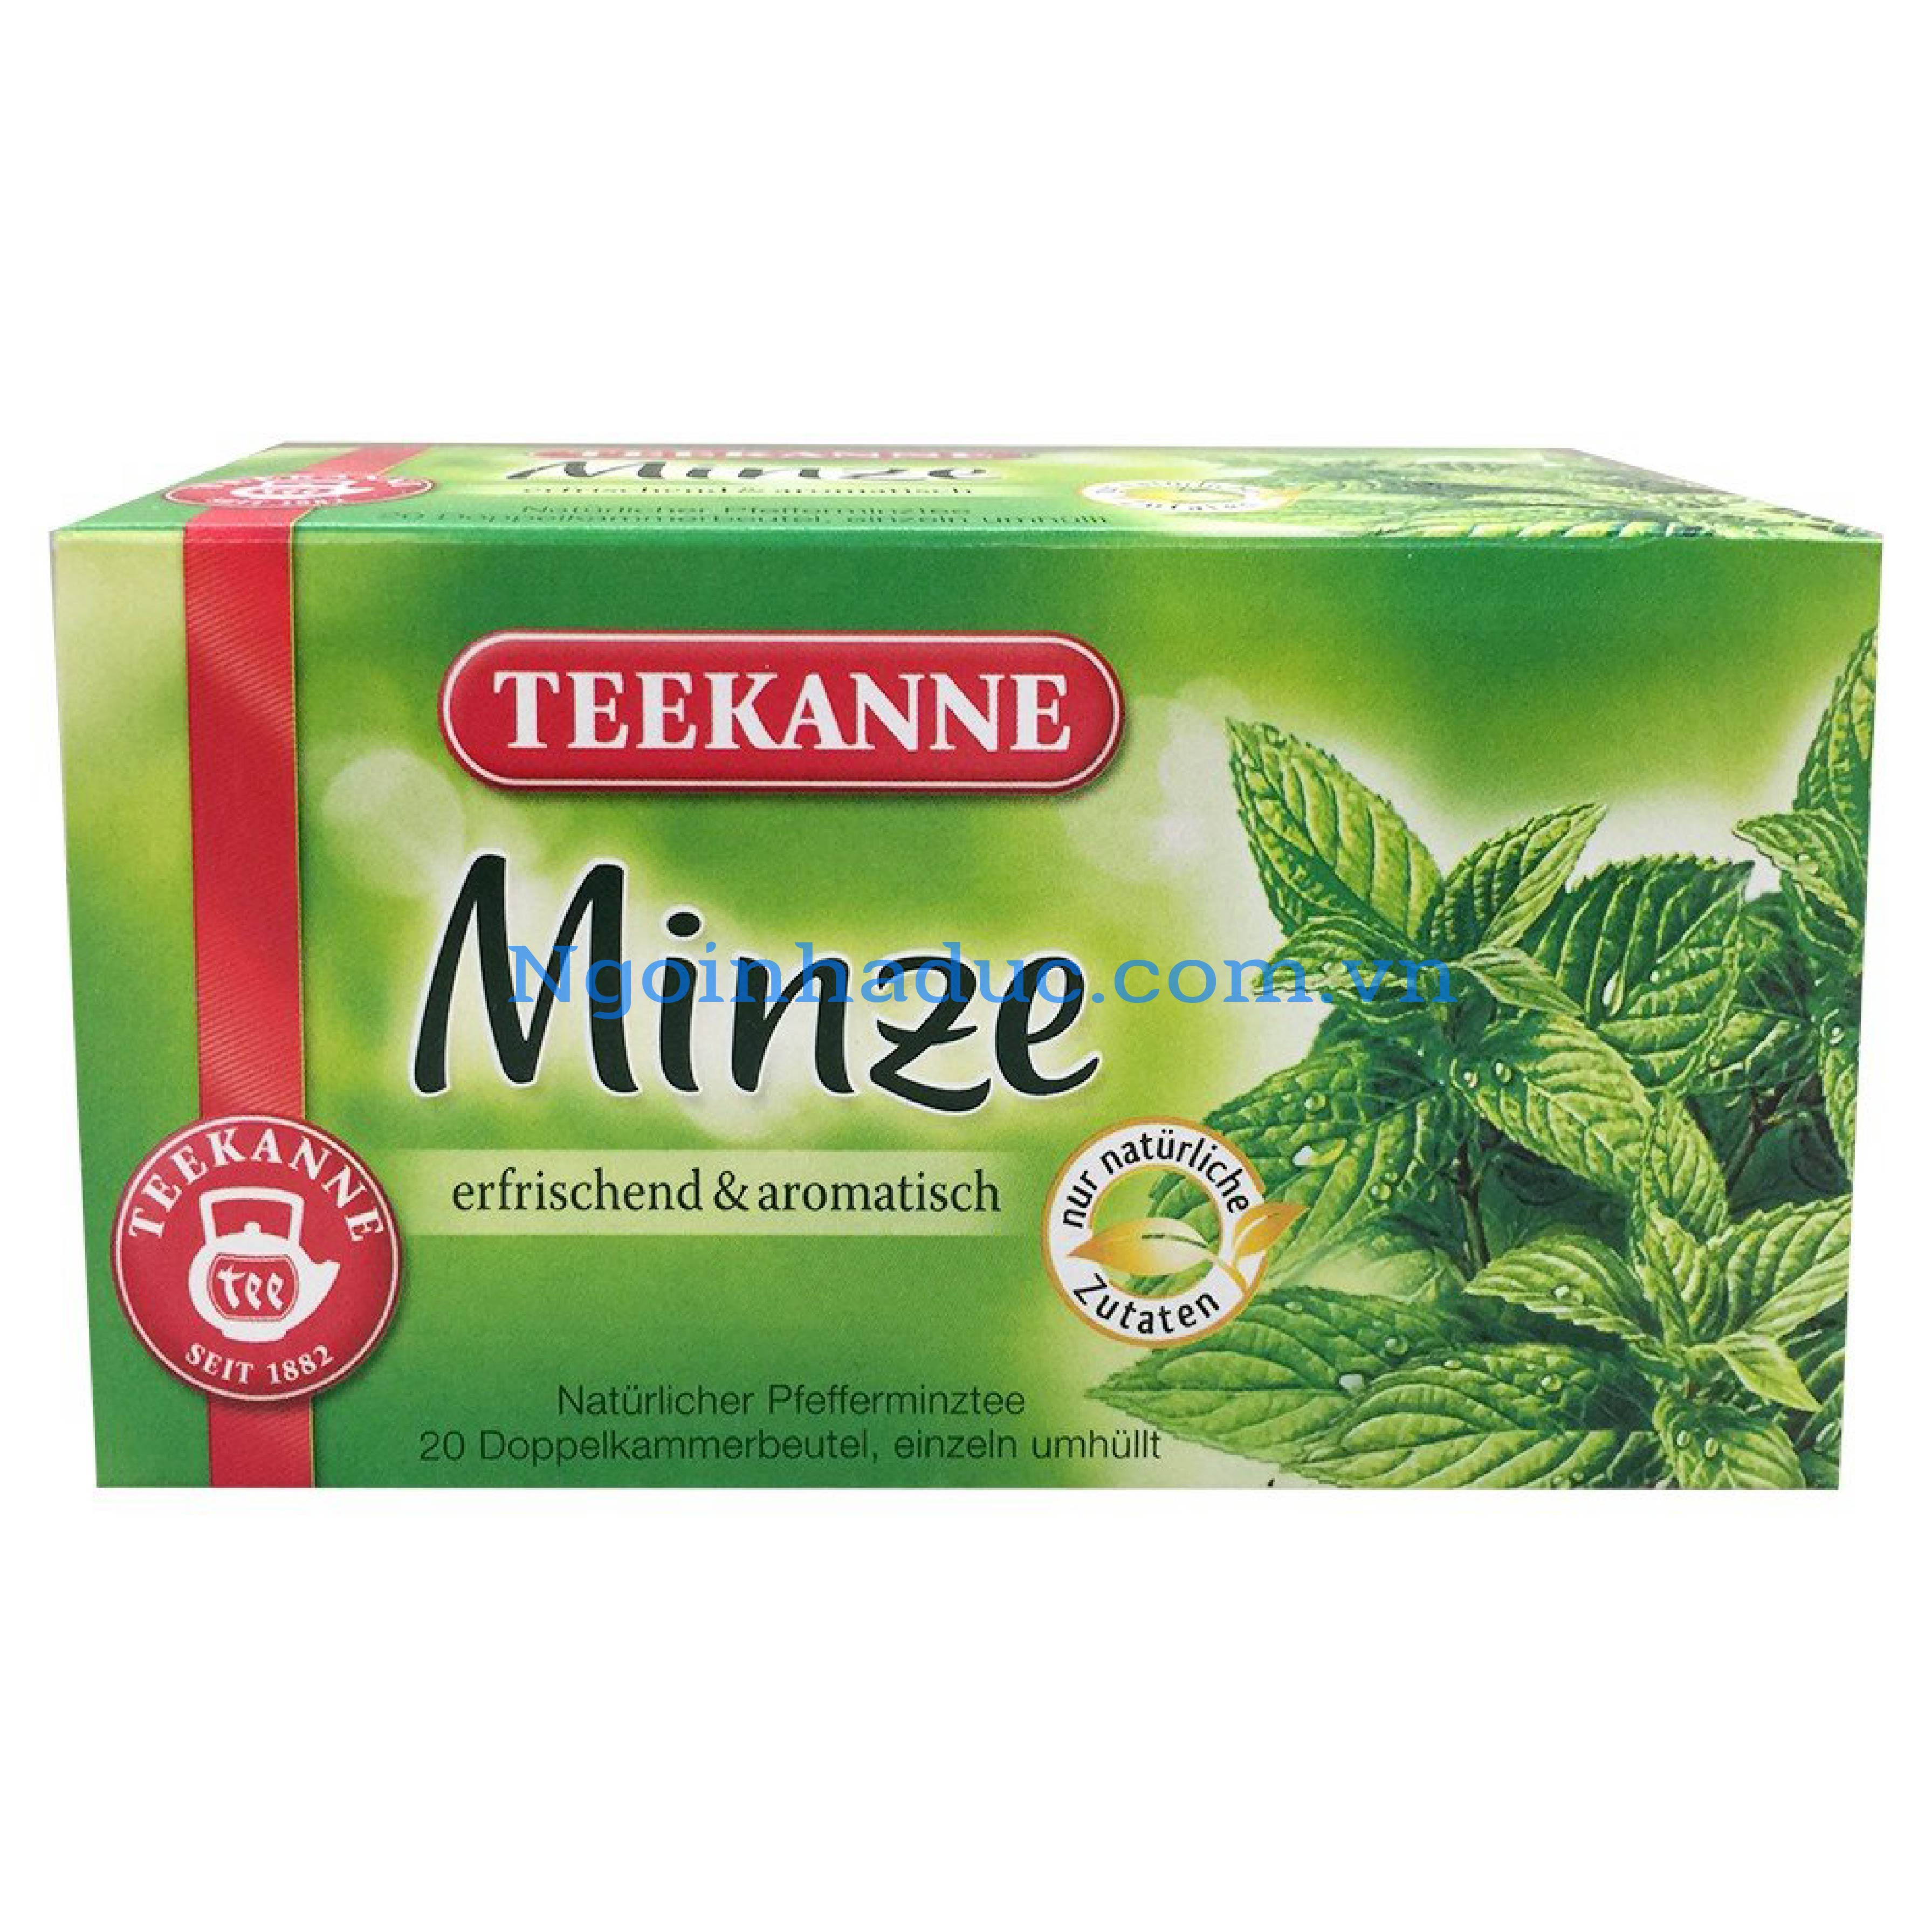 Trà Teekanne Minze - vị bạc hà (hộp 20 gói)